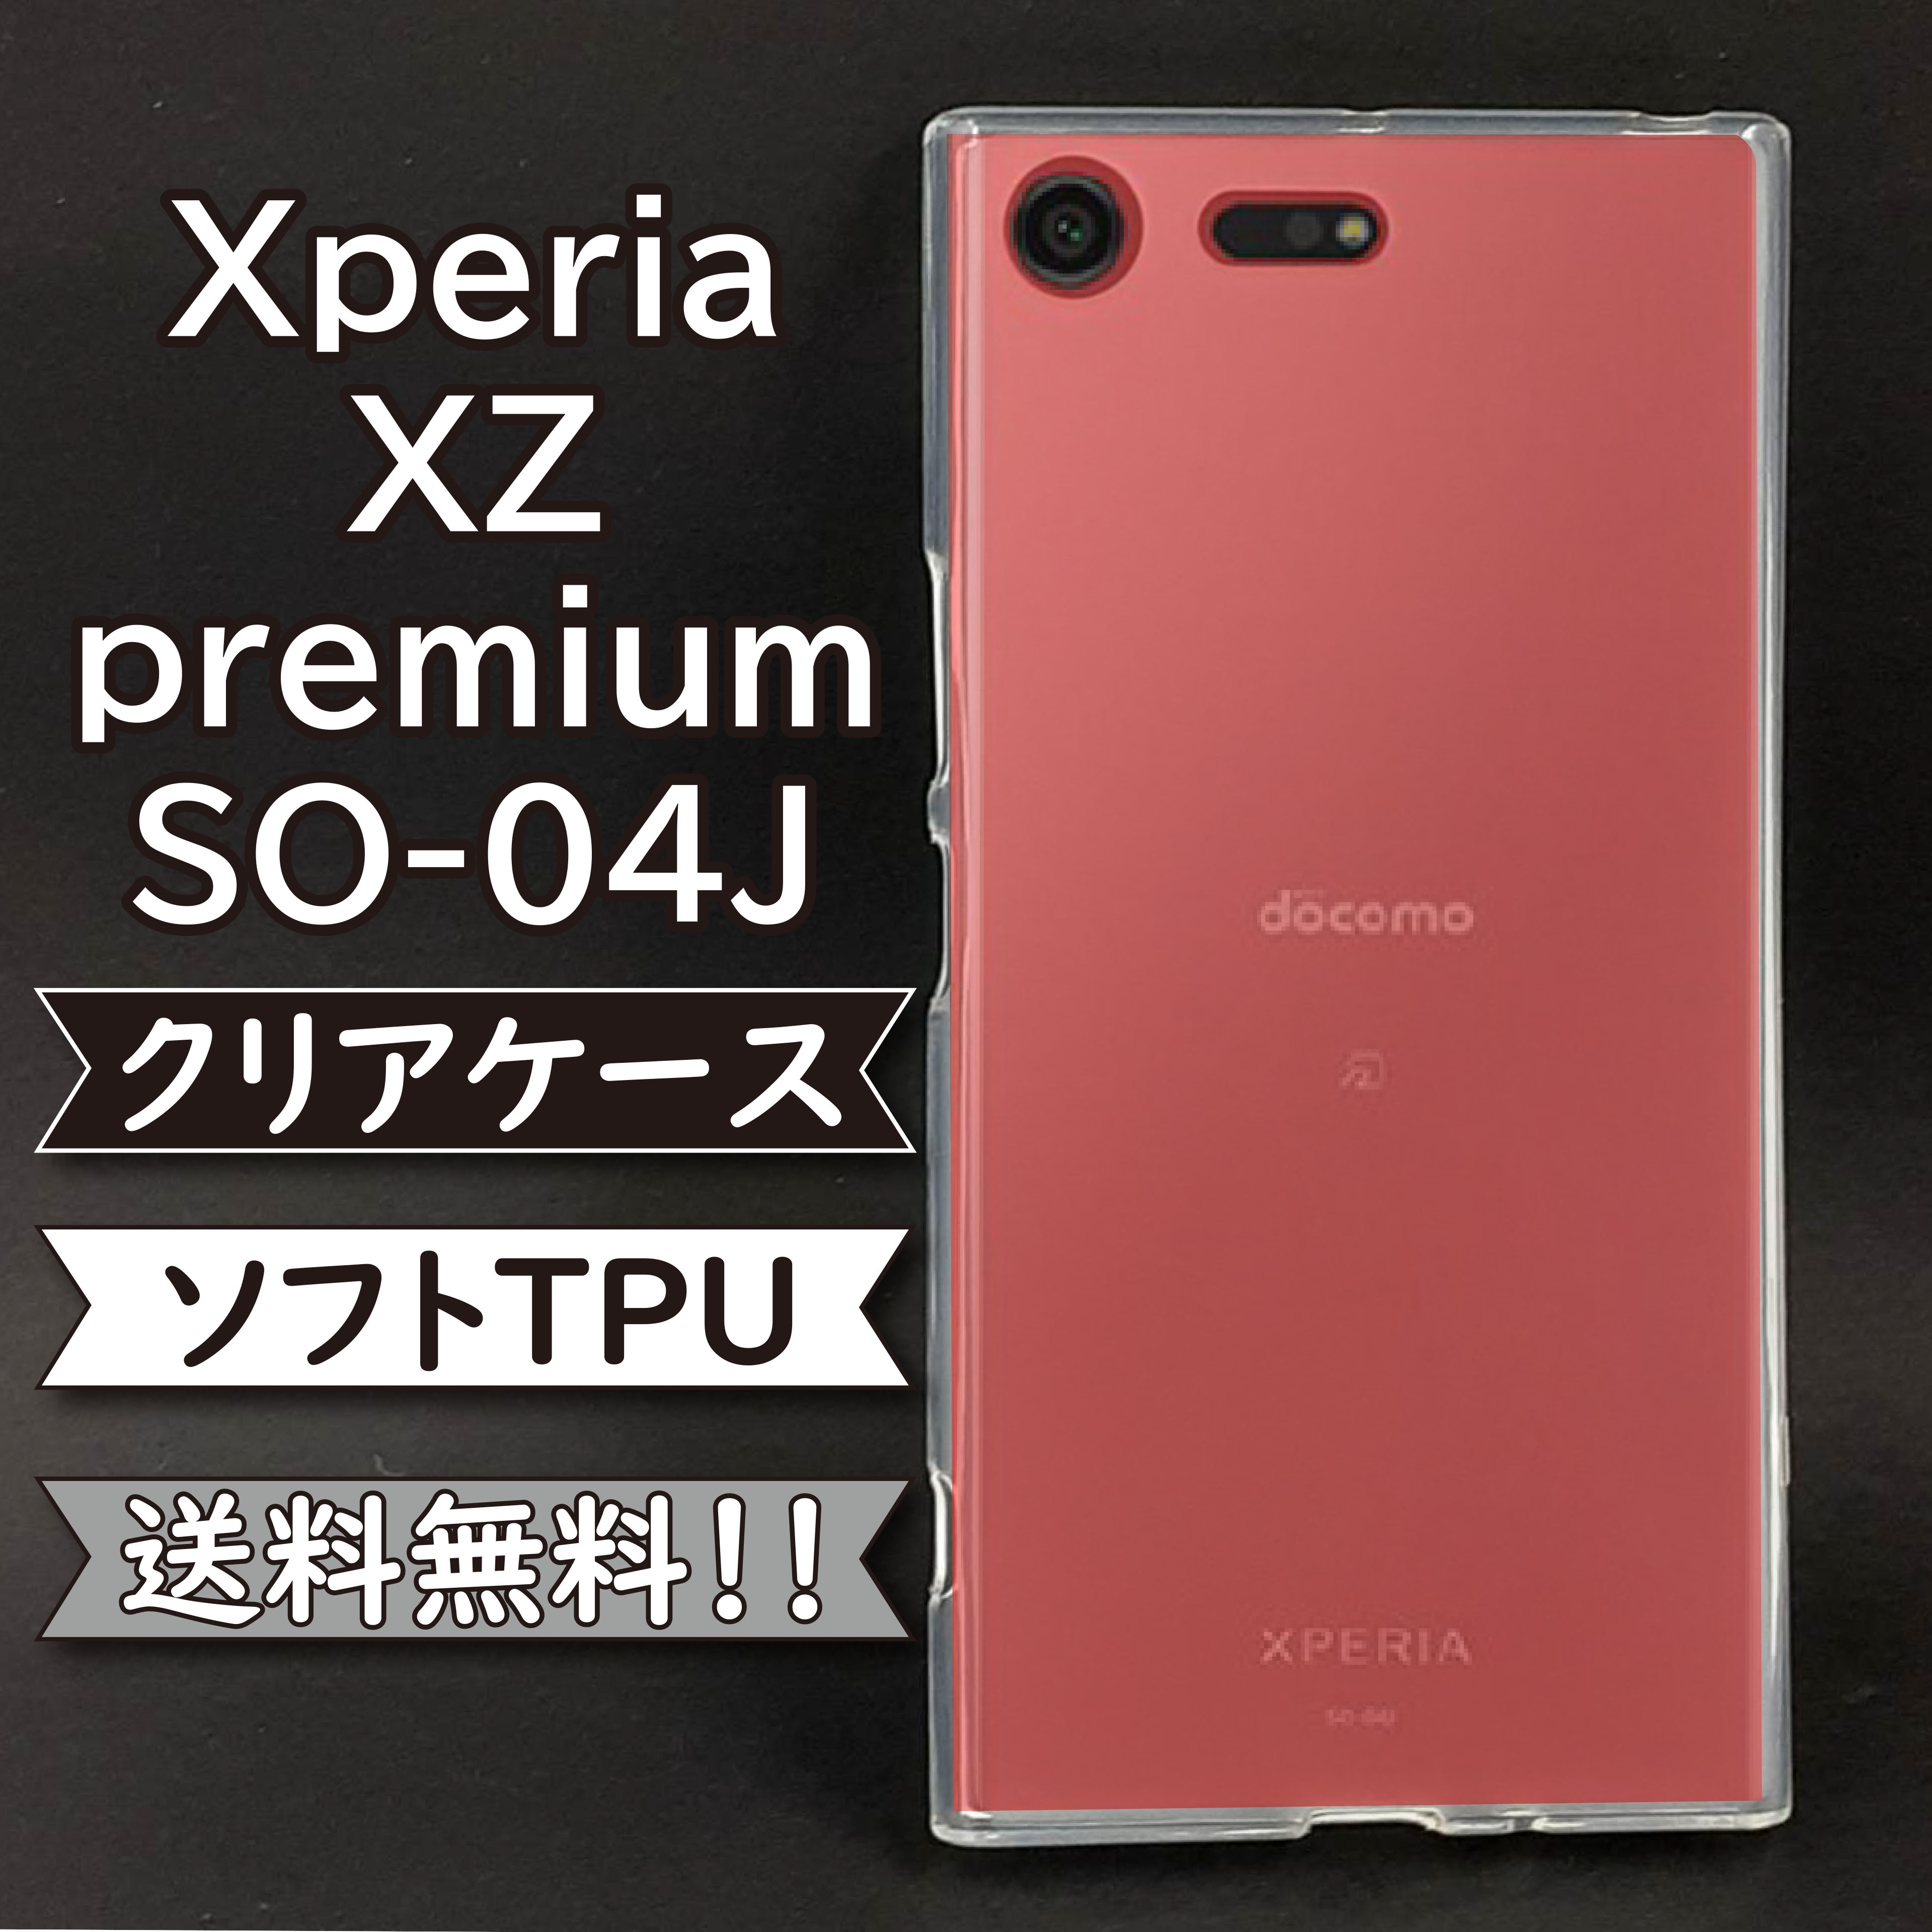 Xperia XZ Premium SOー04J-